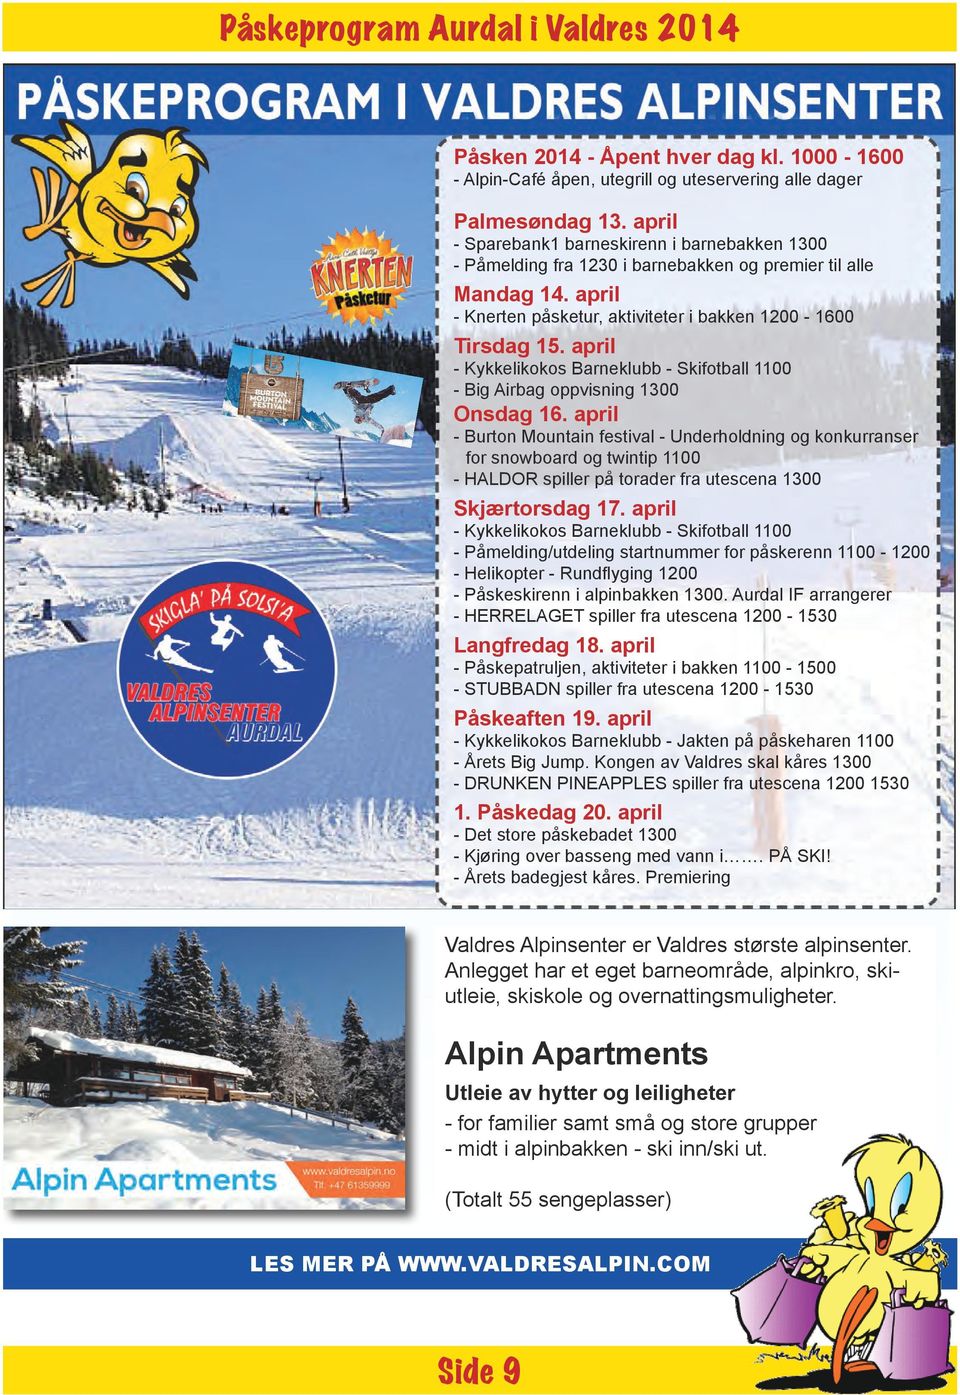 april - Kykkelikokos Barneklubb - Skifotball 1100 - Big Airbag oppvisning 1300 Onsdag 16.